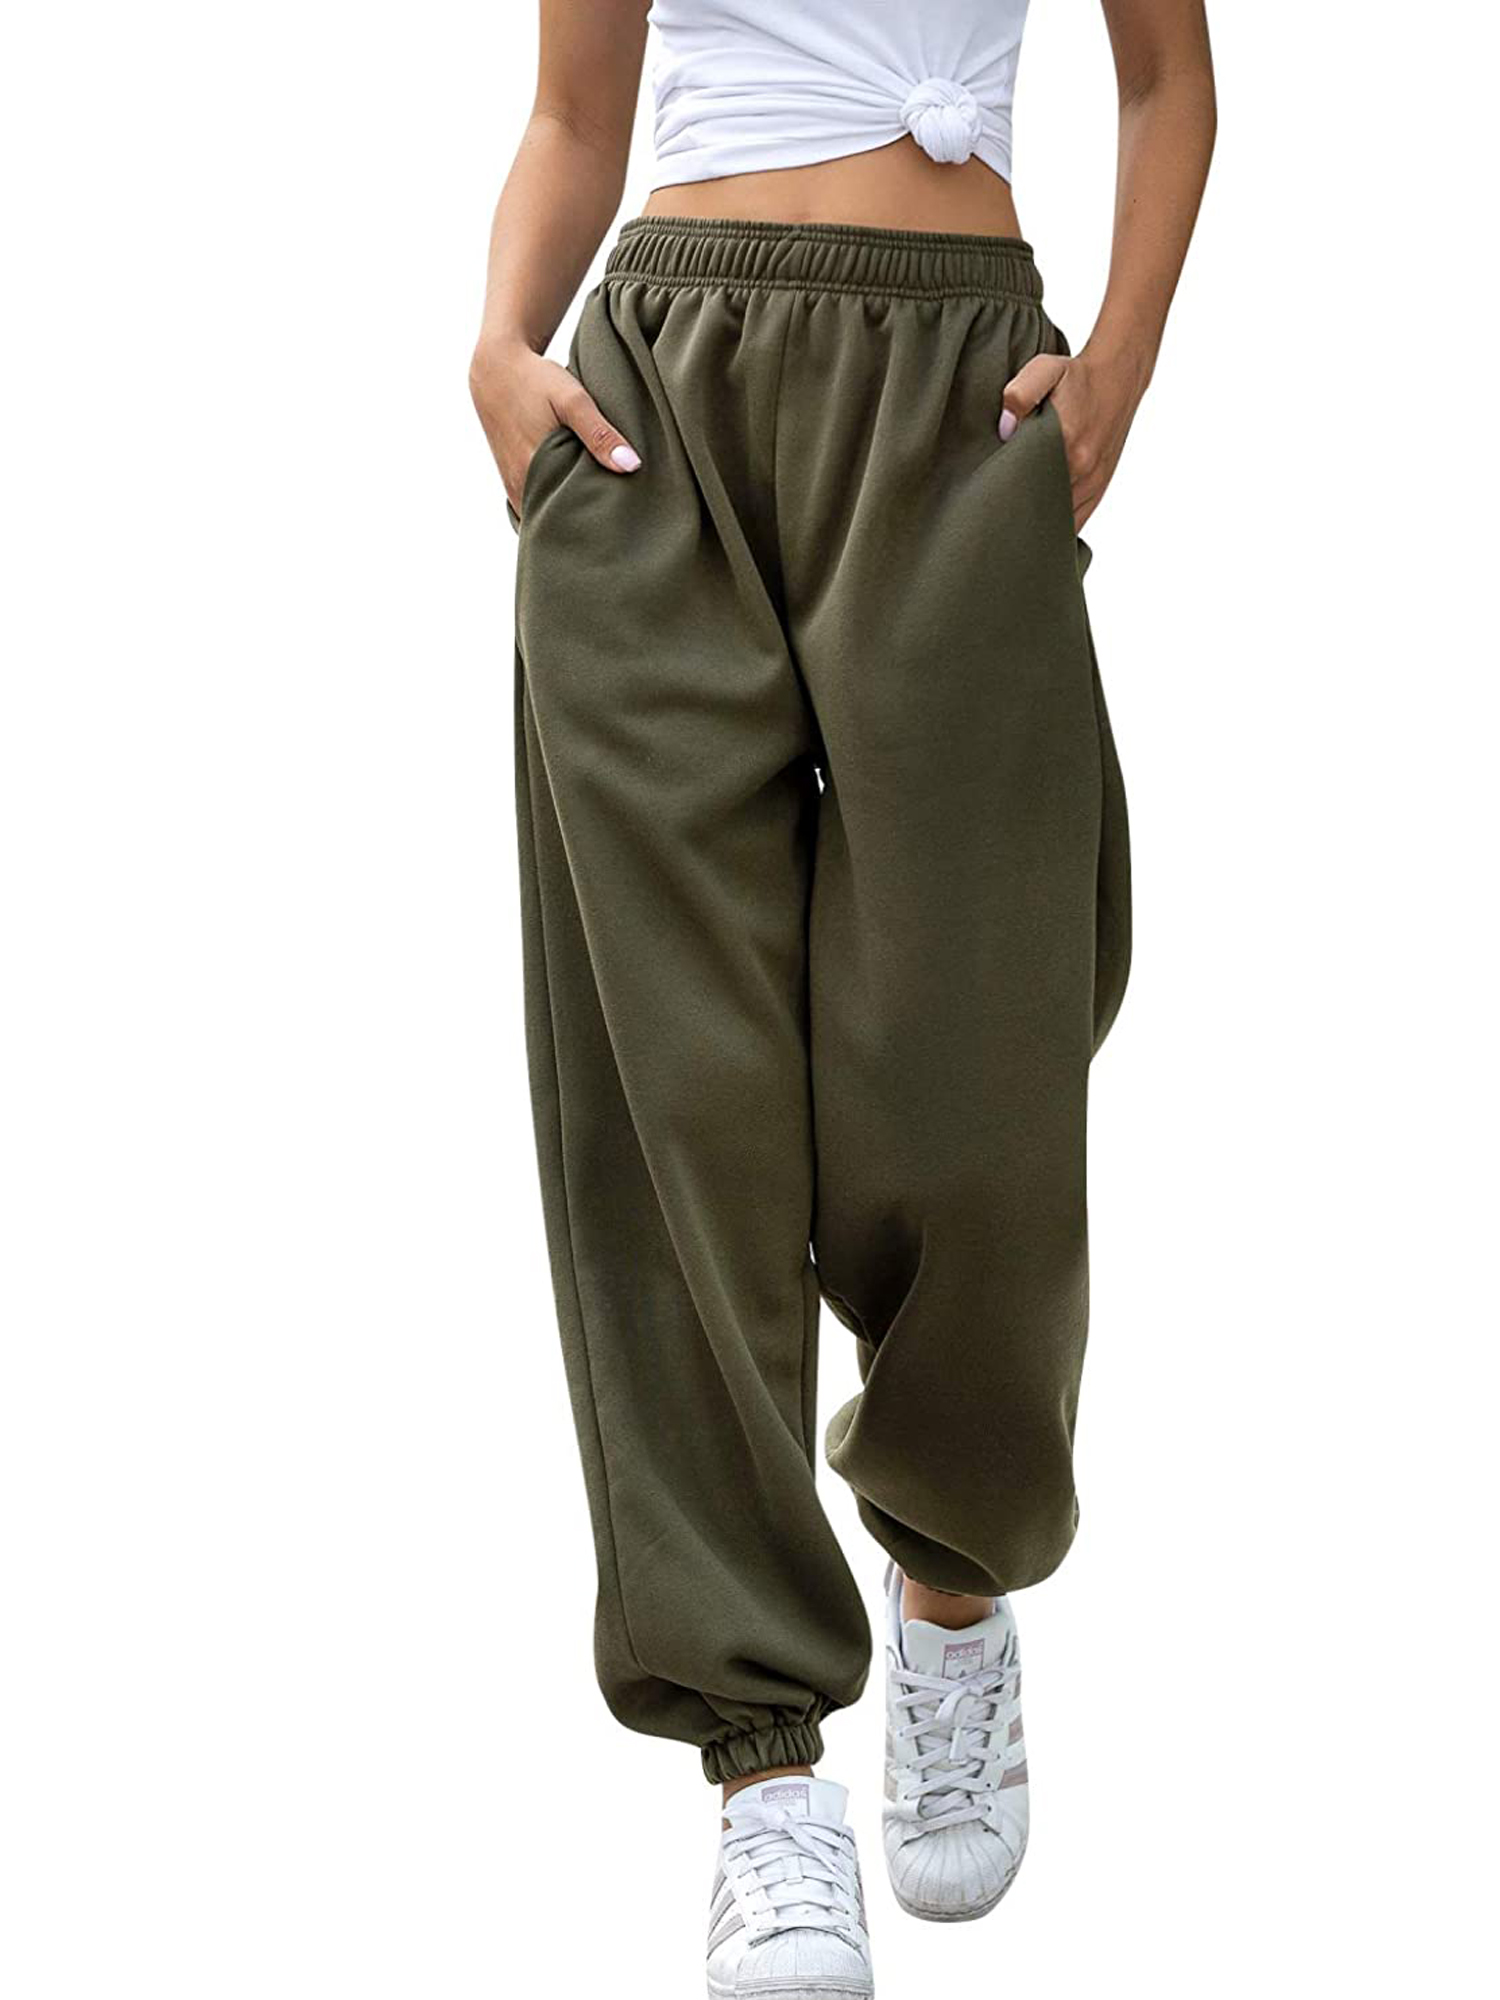 Sunisery Women'S Sport Pants Elastic Cord Stretch High Waist Trousers